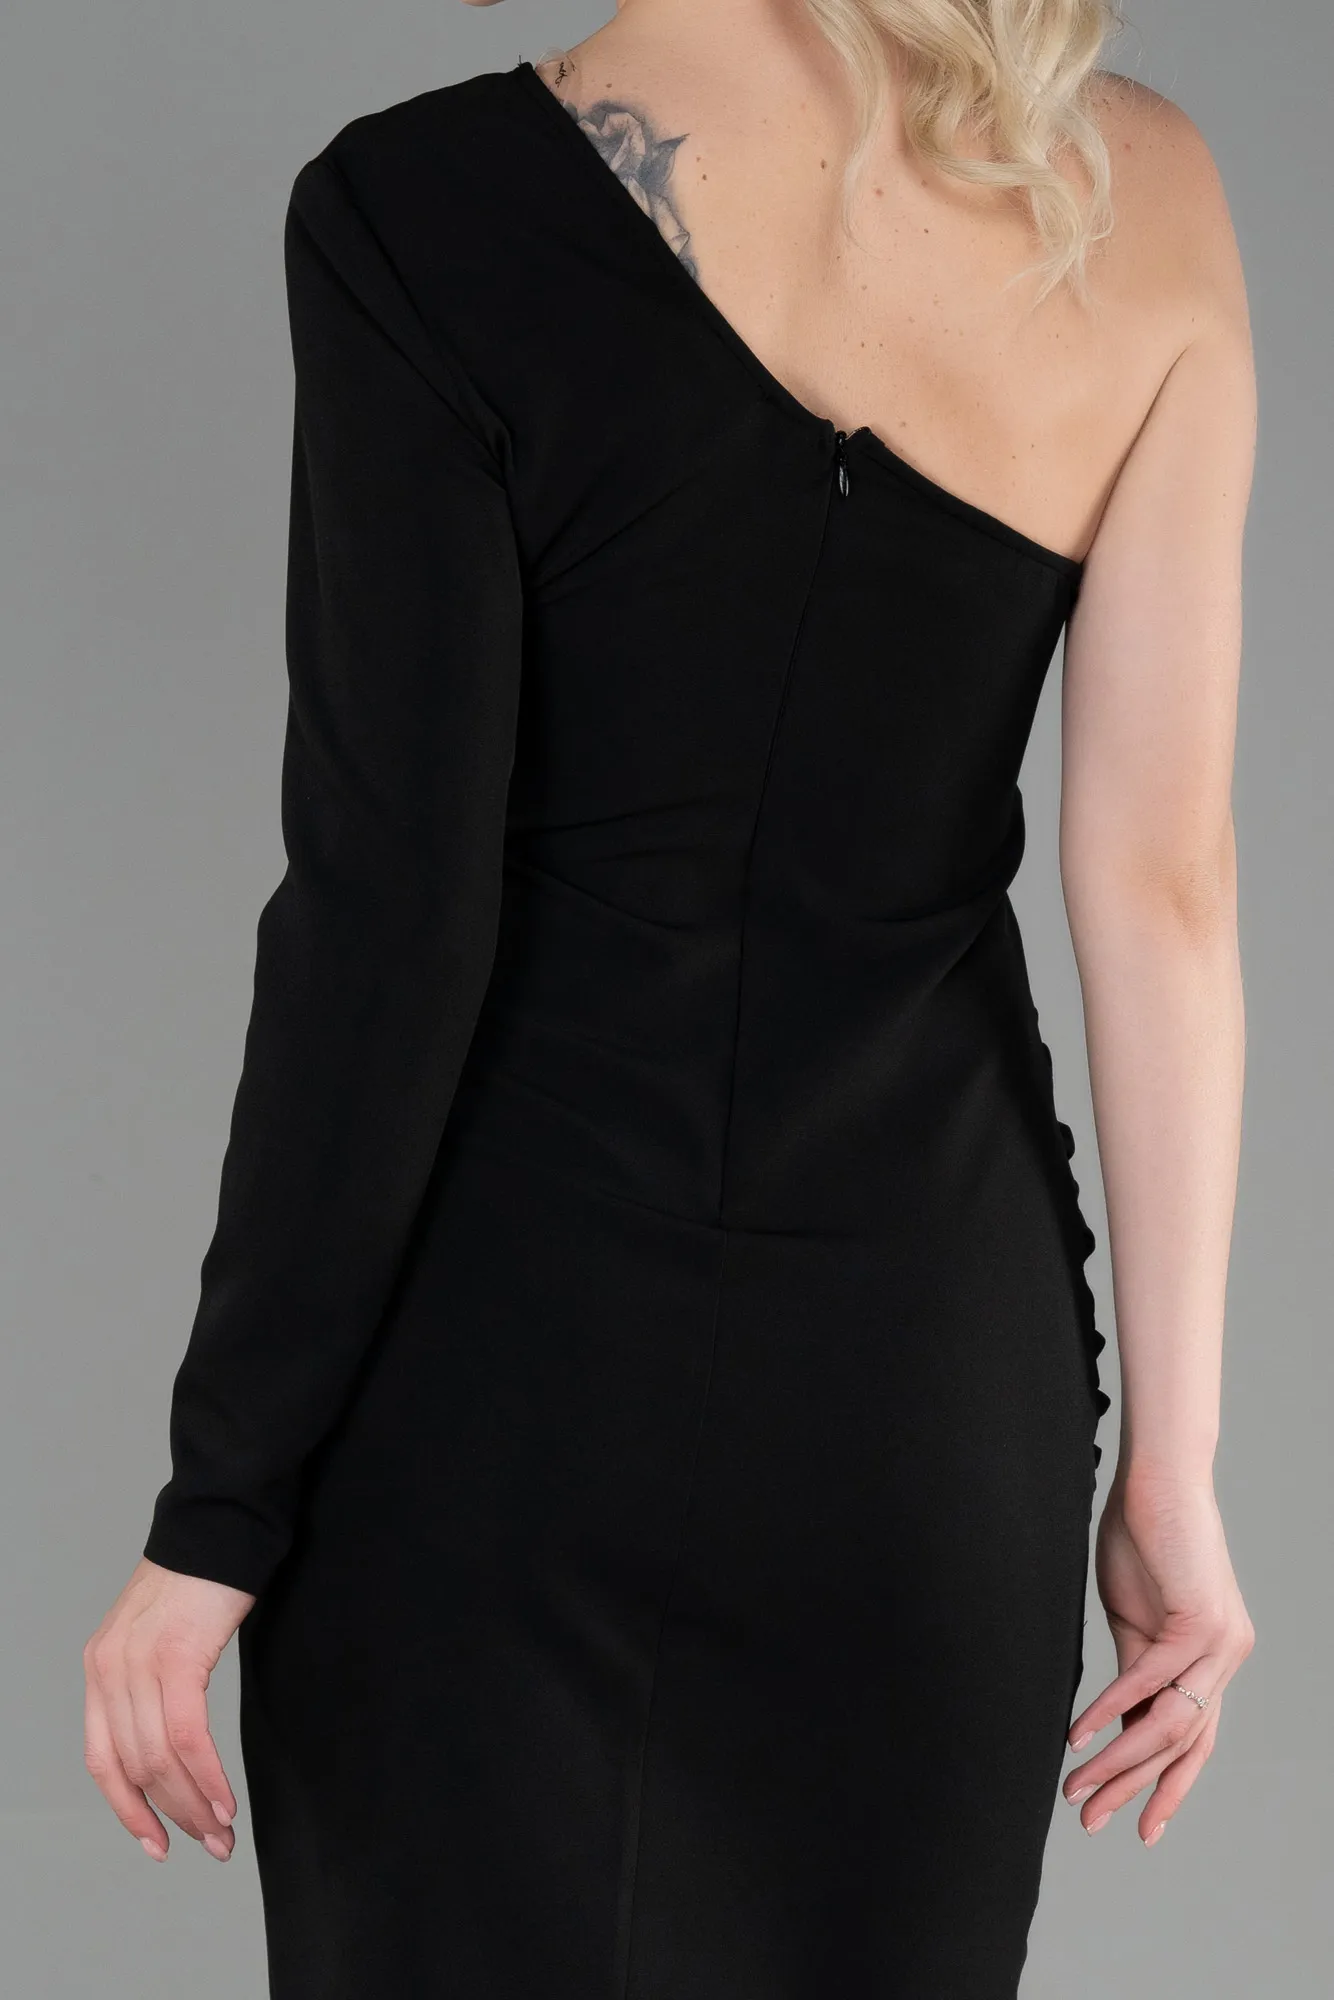 Black-Short Invitation Dress ABK1859